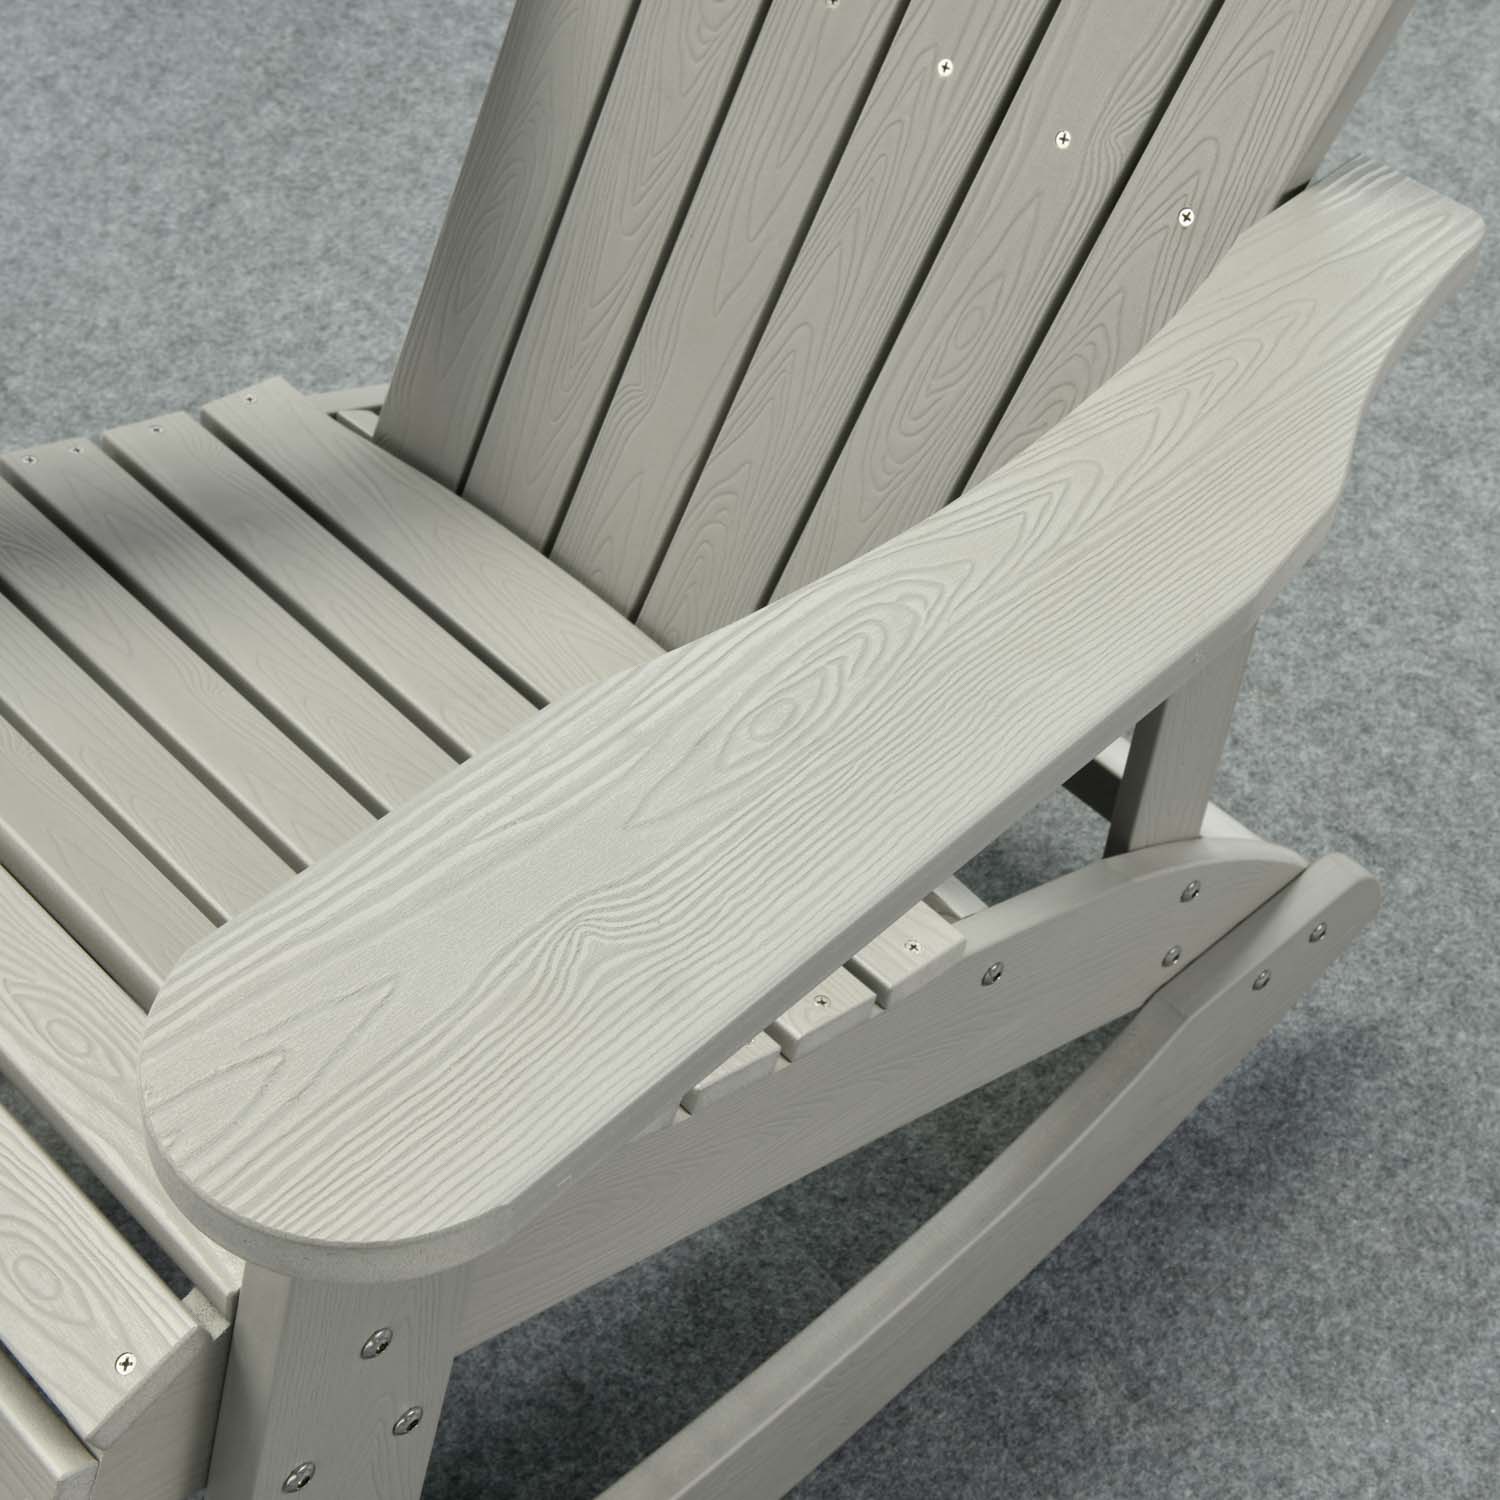 Ovios Outdoor Adirondack Rocker Chair, Waterproof Lounge Chair